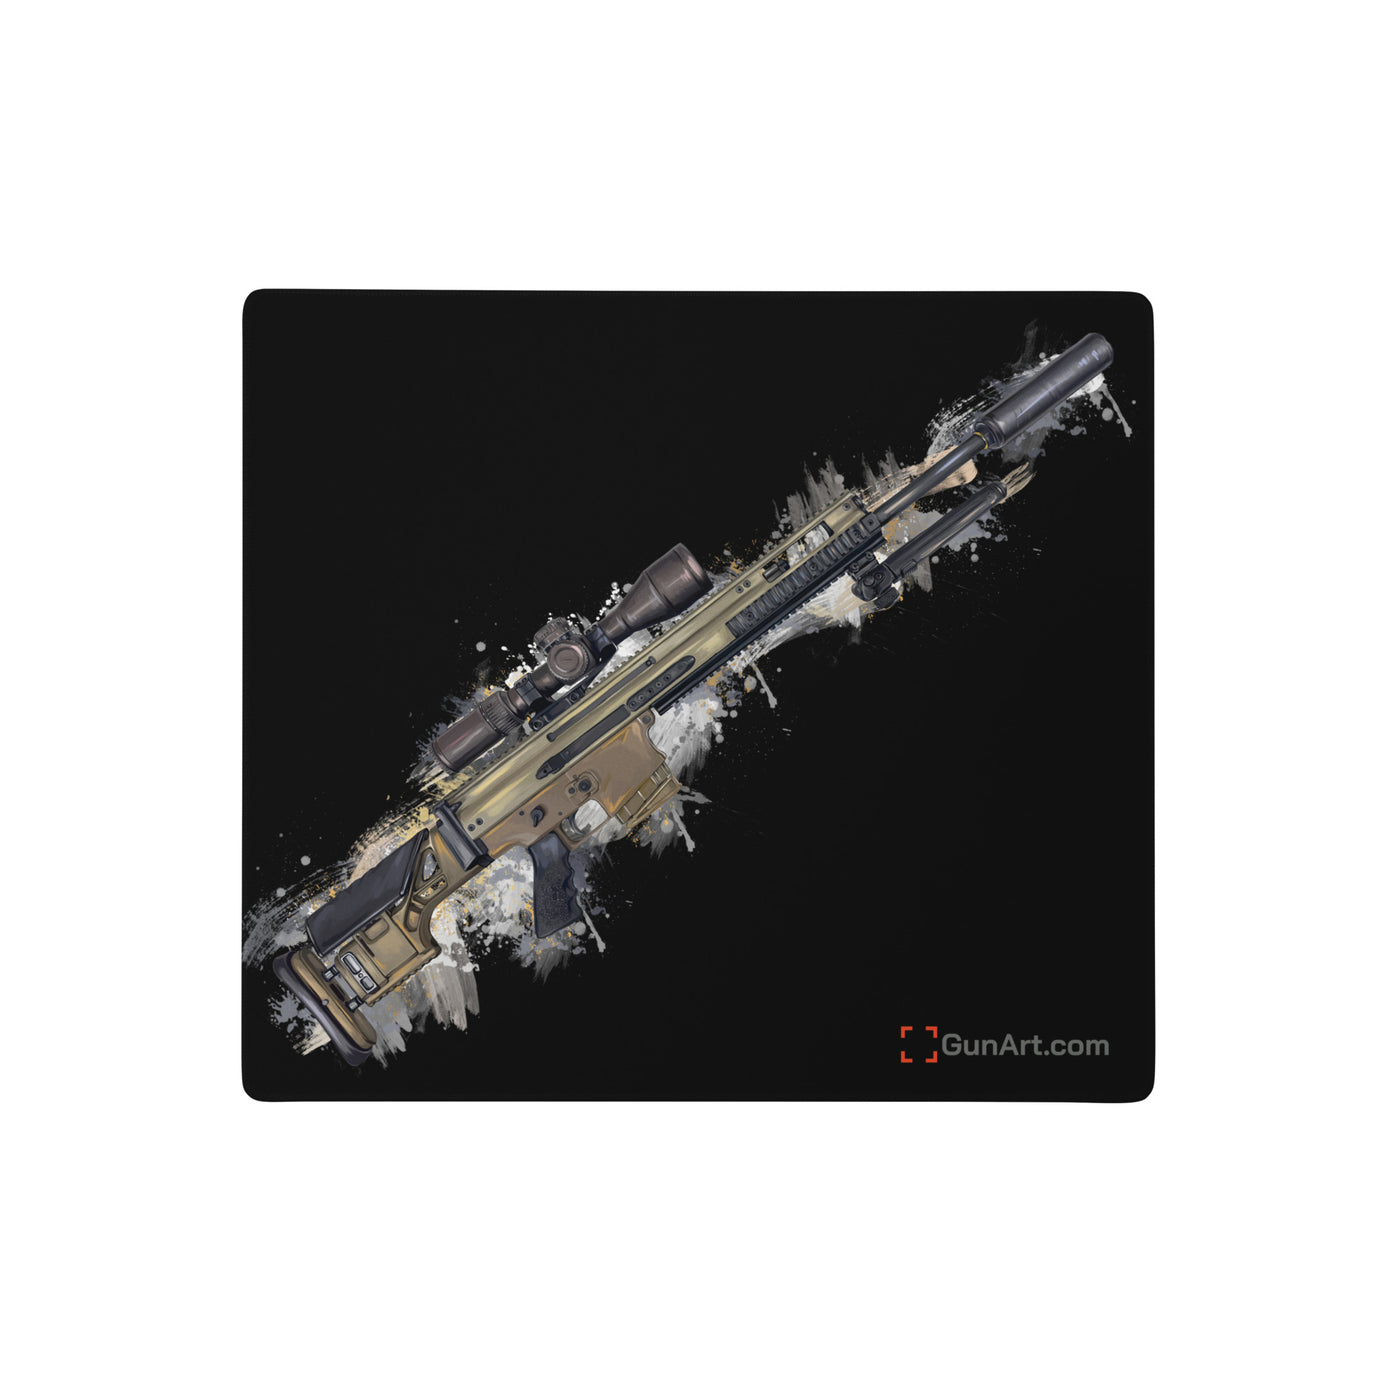 Socom Sniper Rifle Gaming Mouse Pad - Black Background